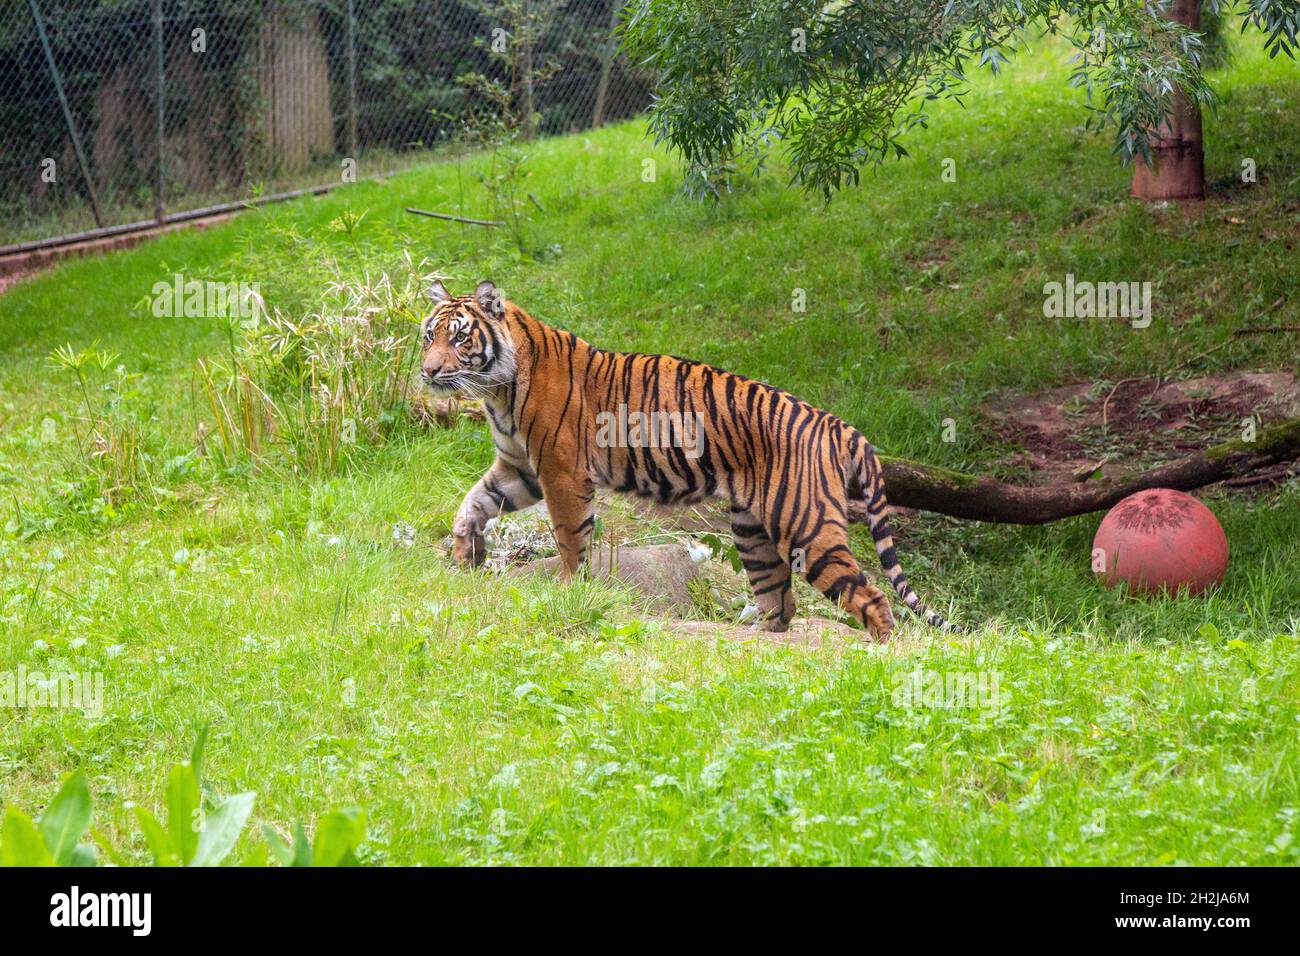 Tigre de Sumatran en el zoológico de Paignton, Devon, Inglaterra, Reino Unido. Foto de stock